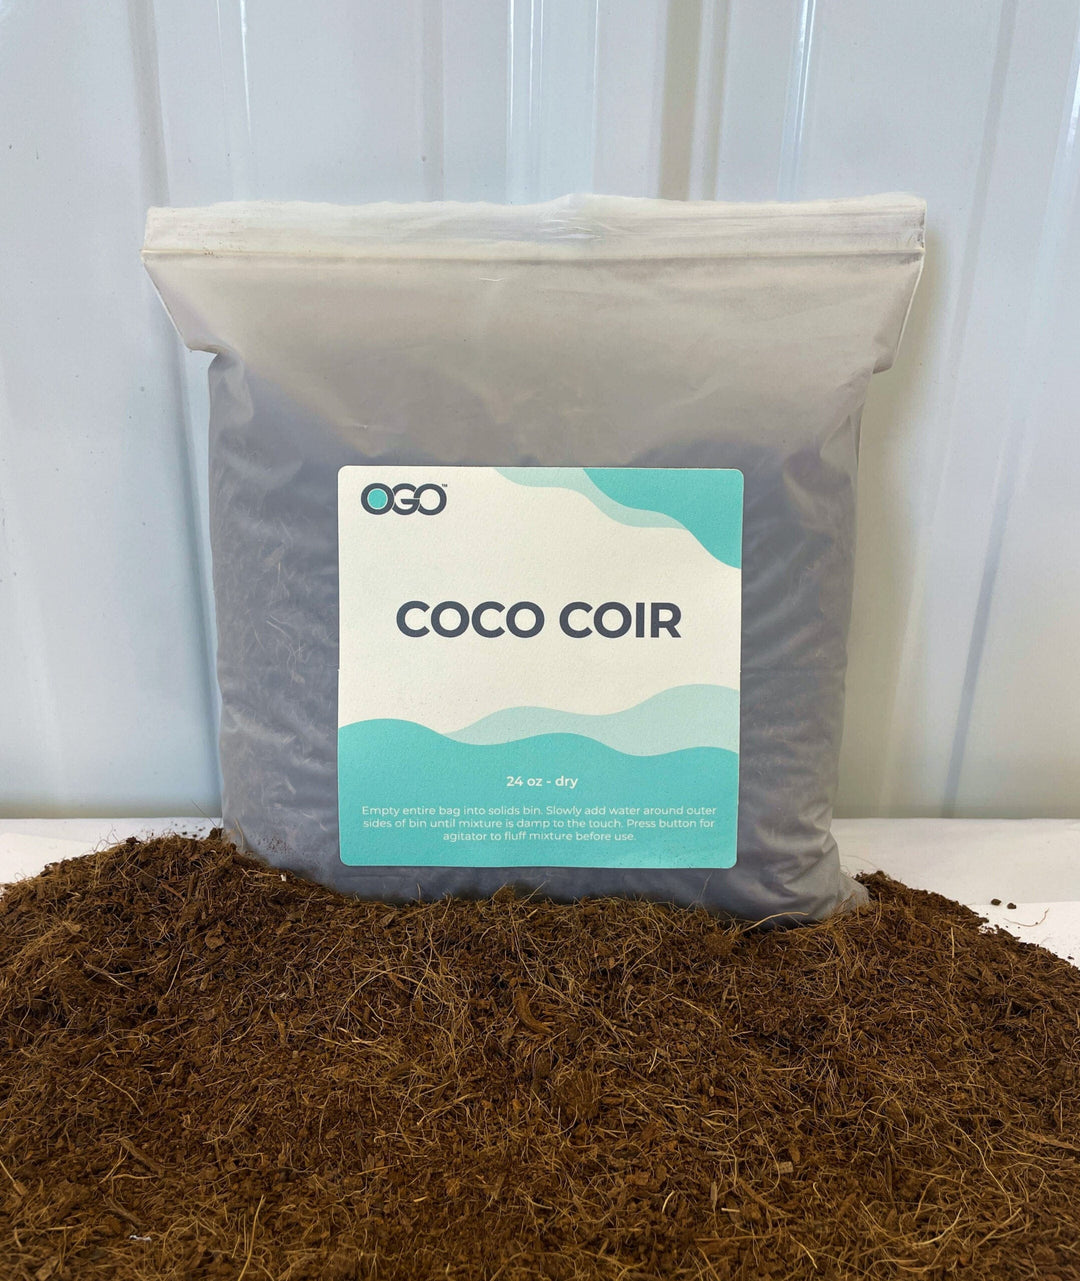 OGO OGO Coco Coir - 6 Pack ogo-coco